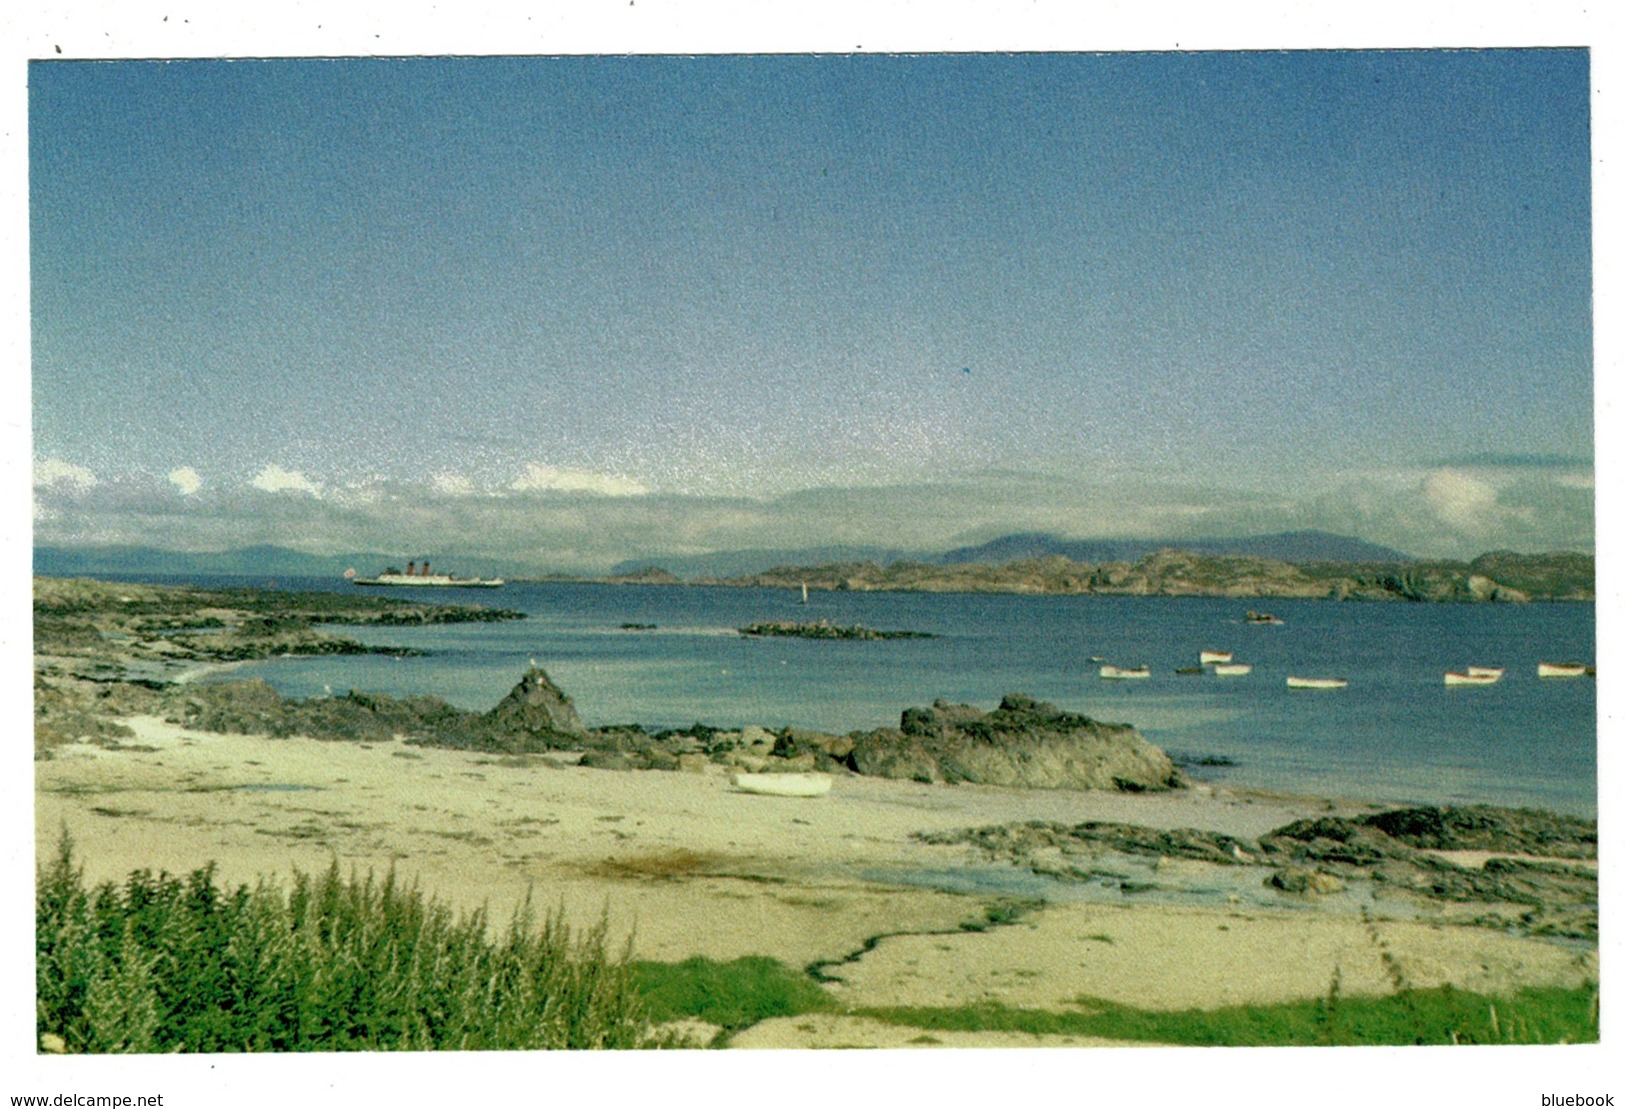 Ref 1356 - 2 X Postcard - Iona Abbey & Sound Of Iona Island Scotland - Argyllshire